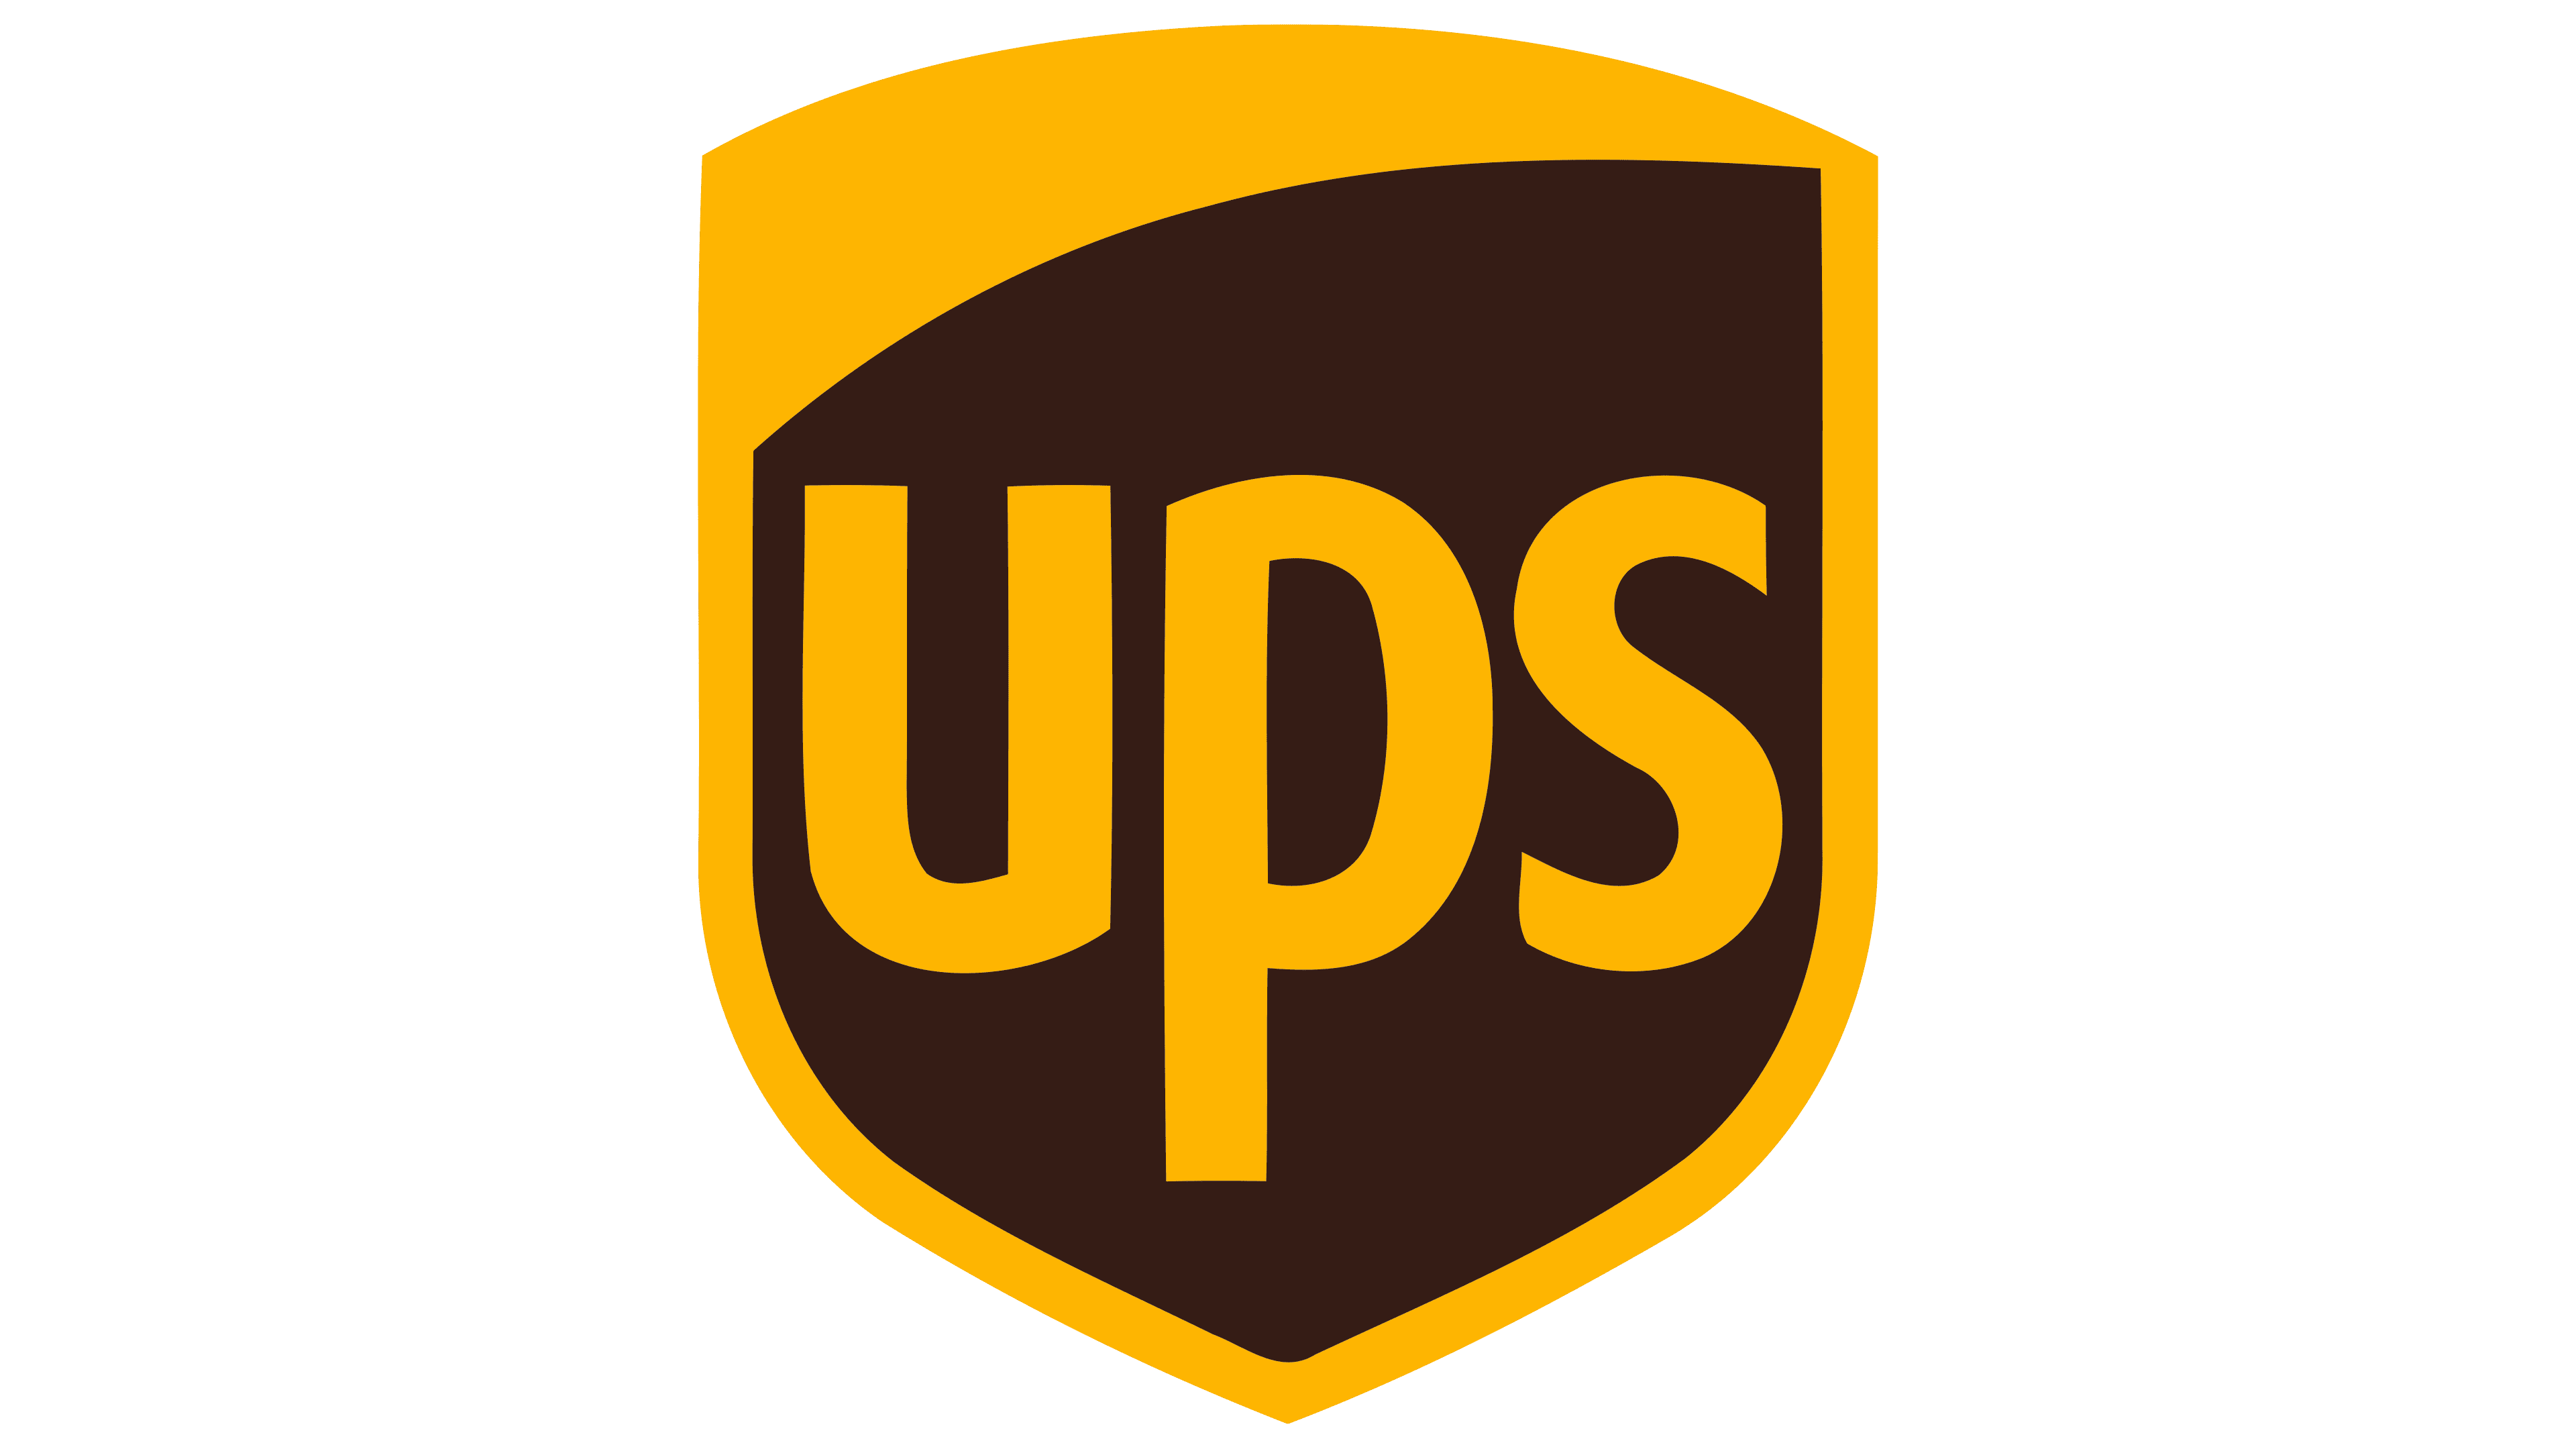 Standard • UPS